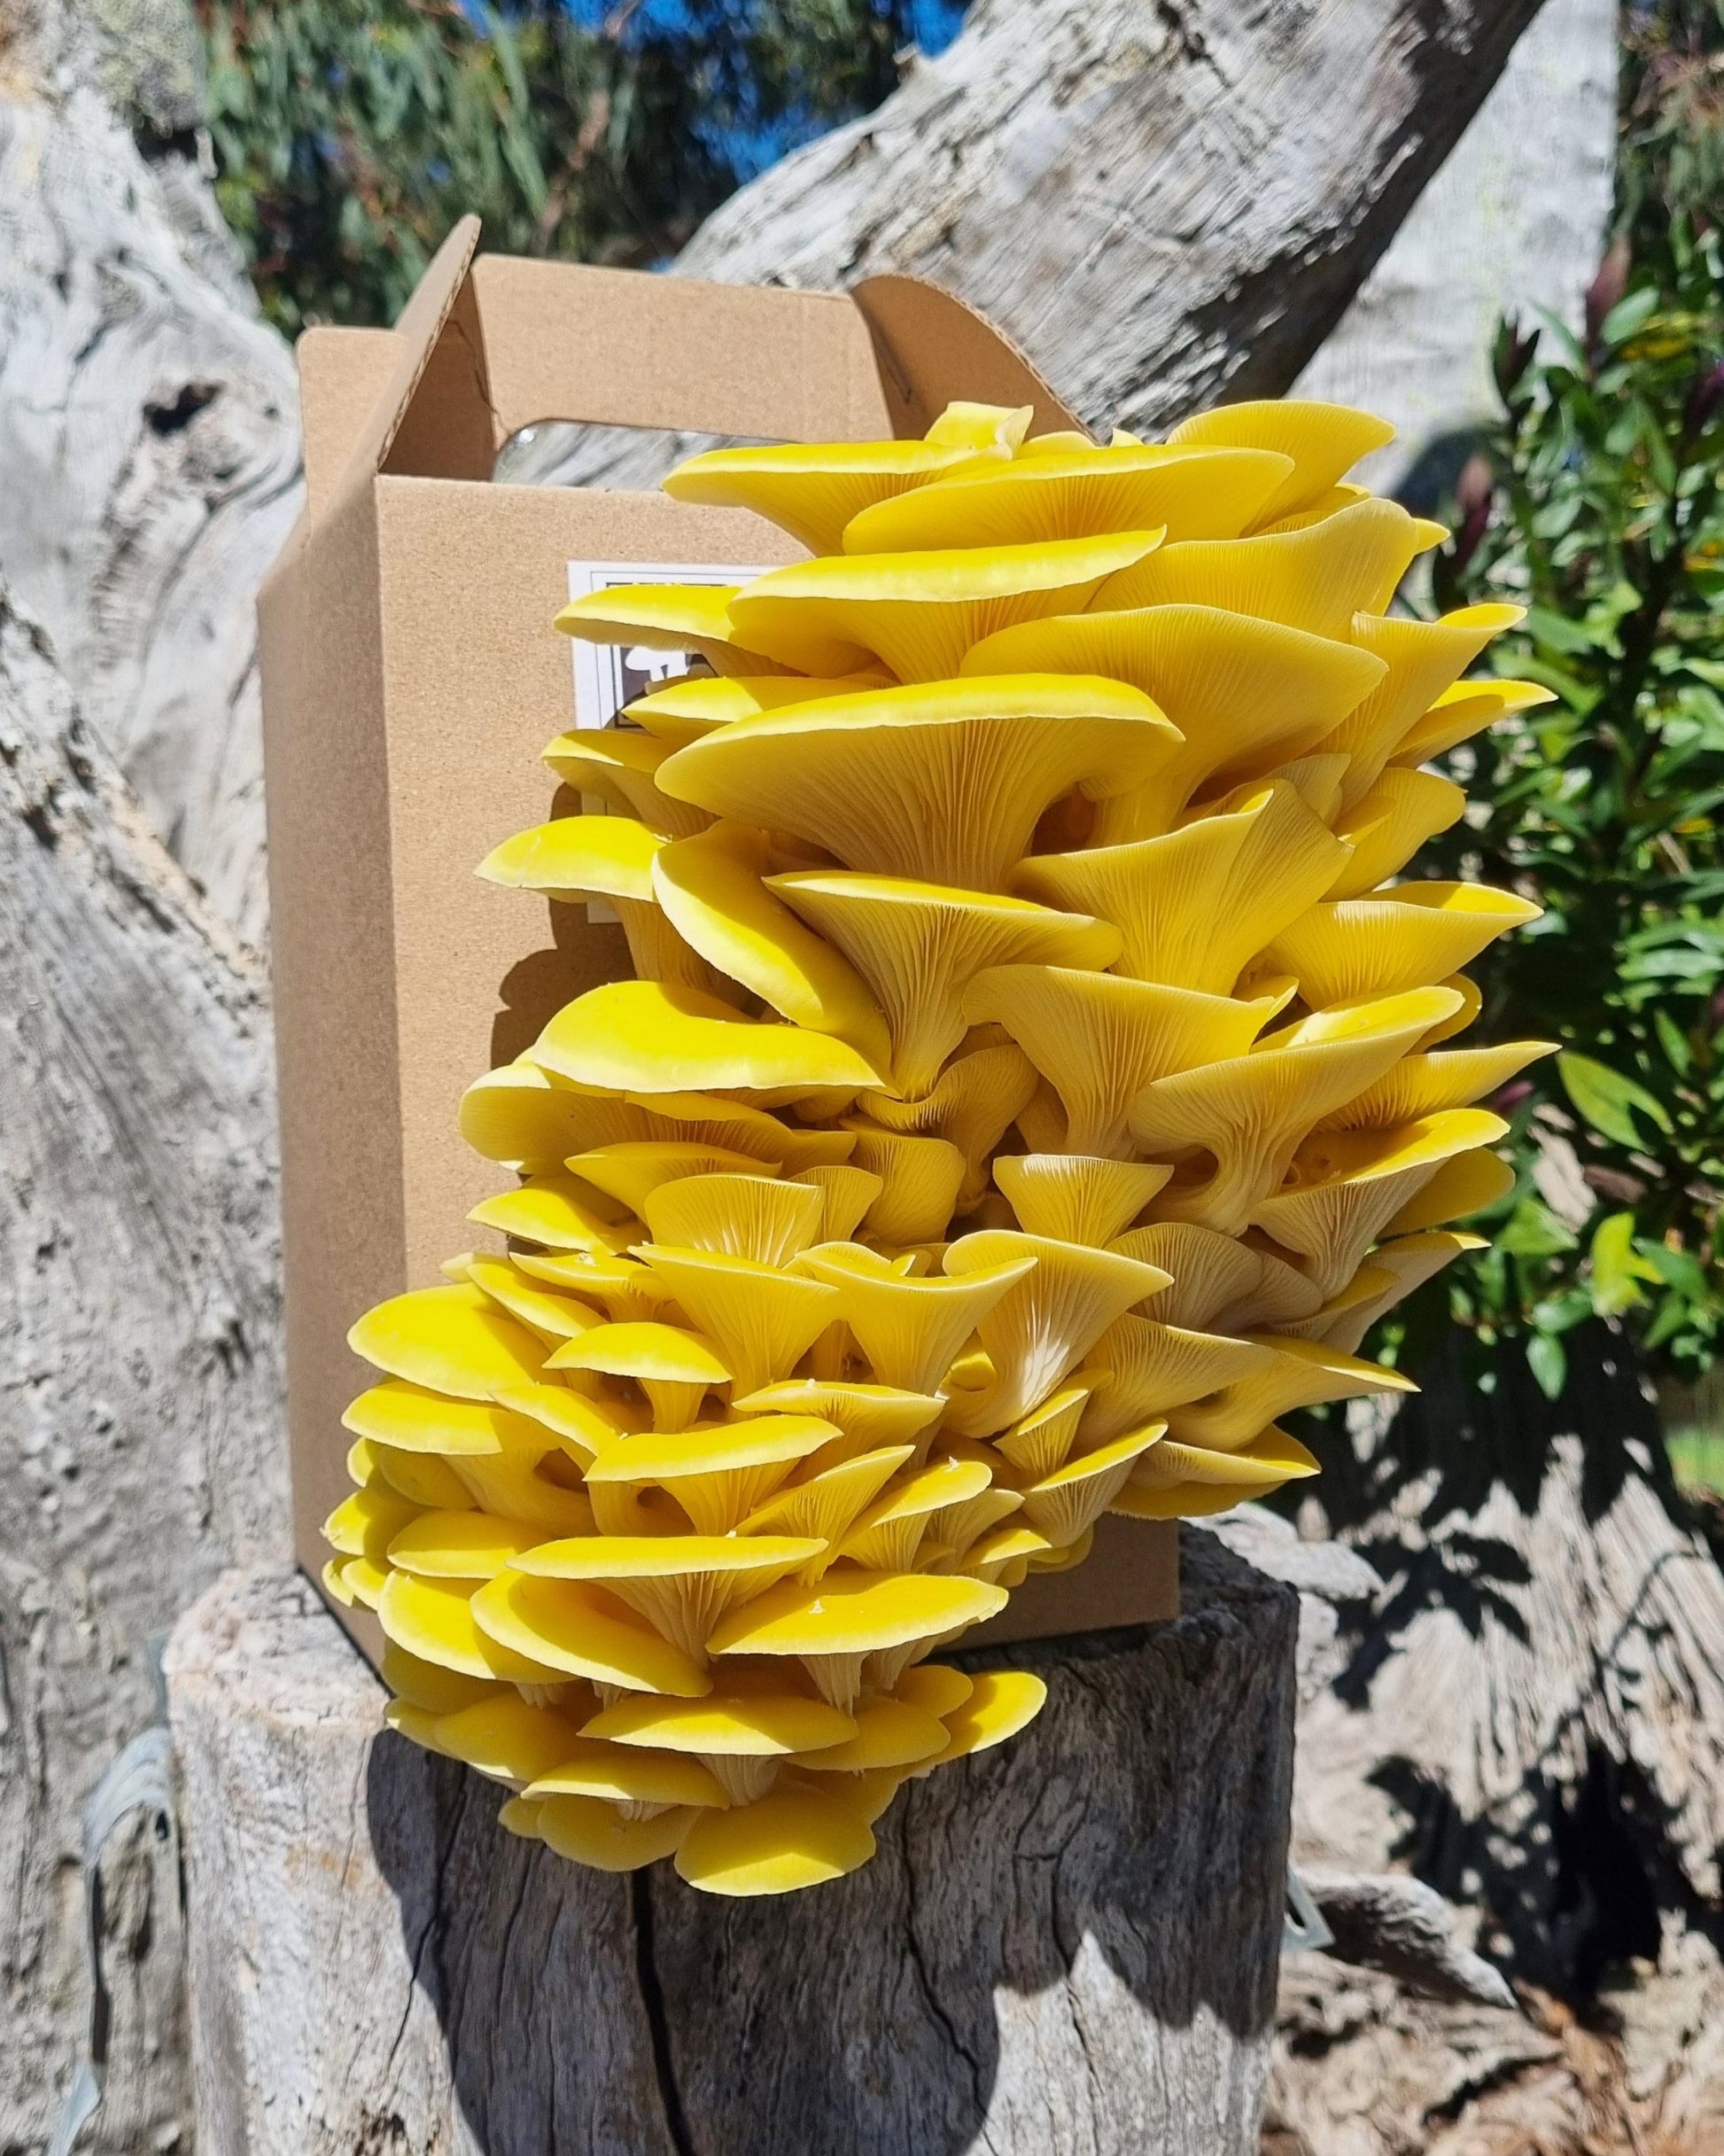 The Mushroom Connection - Yellow Oyster Mushroom Grow Kit